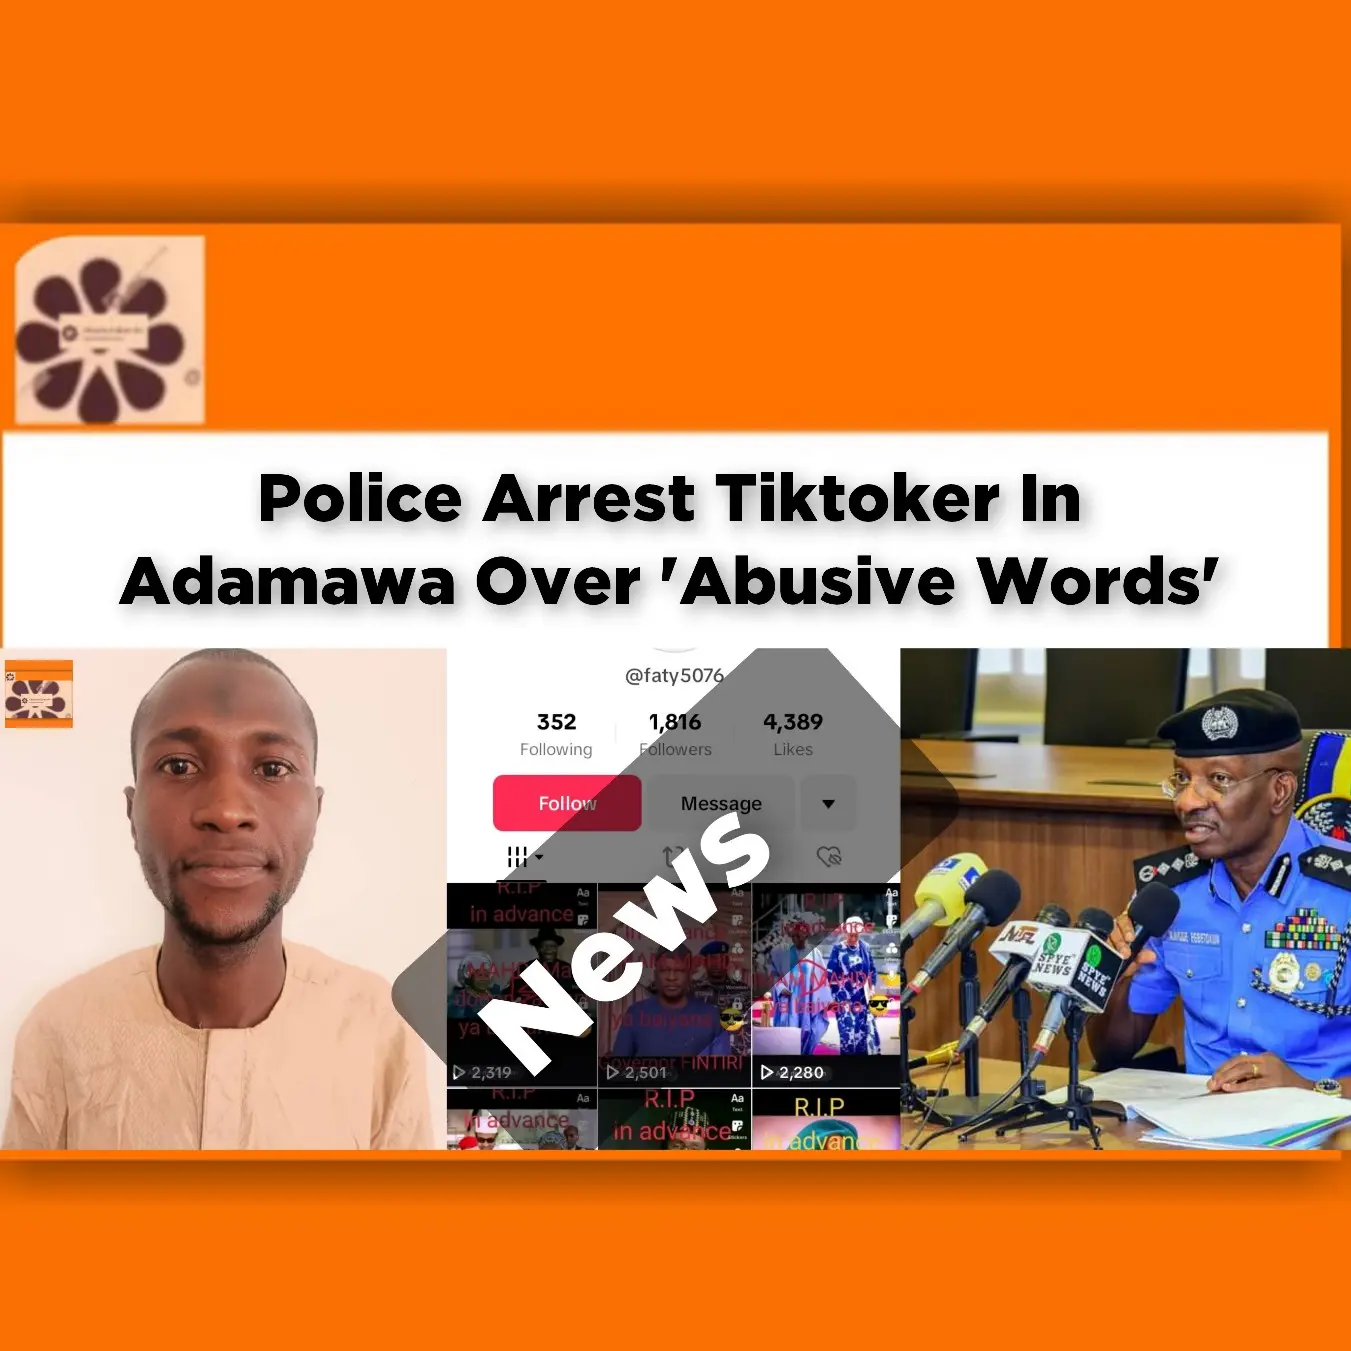 Police Arrest Tiktoker In Adamawa Over 'Abusive Words' ~ OsazuwaAkonedo #Adamawa #Aliyu #Bola #Buhari #Cybertalking #Ebele #Goodluck #Imam #Jonathan #Mahdi #Muhammadu #Musa #Nuhu #Police #Ribadu #Tiktok #Tinubu #USA